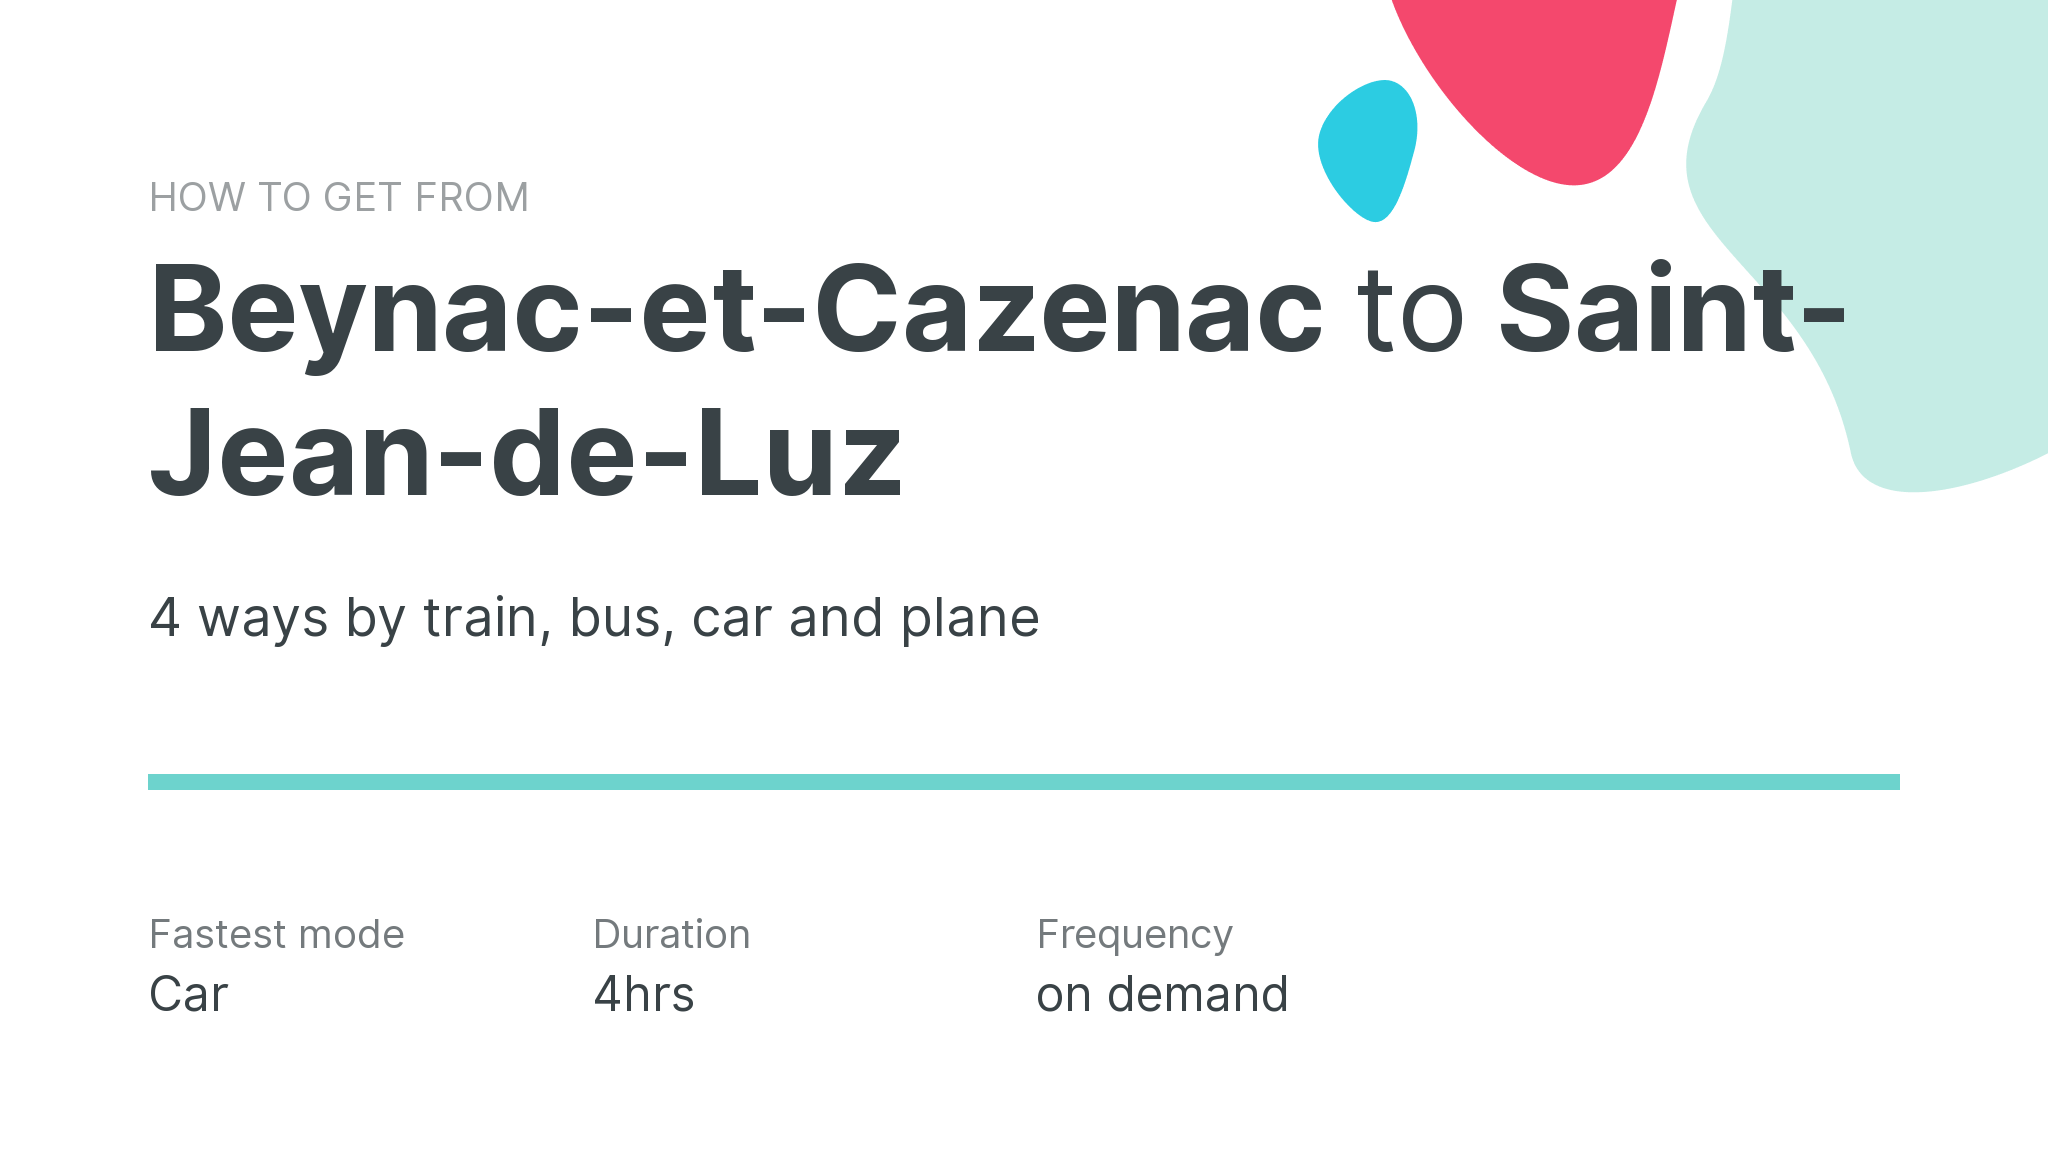 How do I get from Beynac-et-Cazenac to Saint-Jean-de-Luz